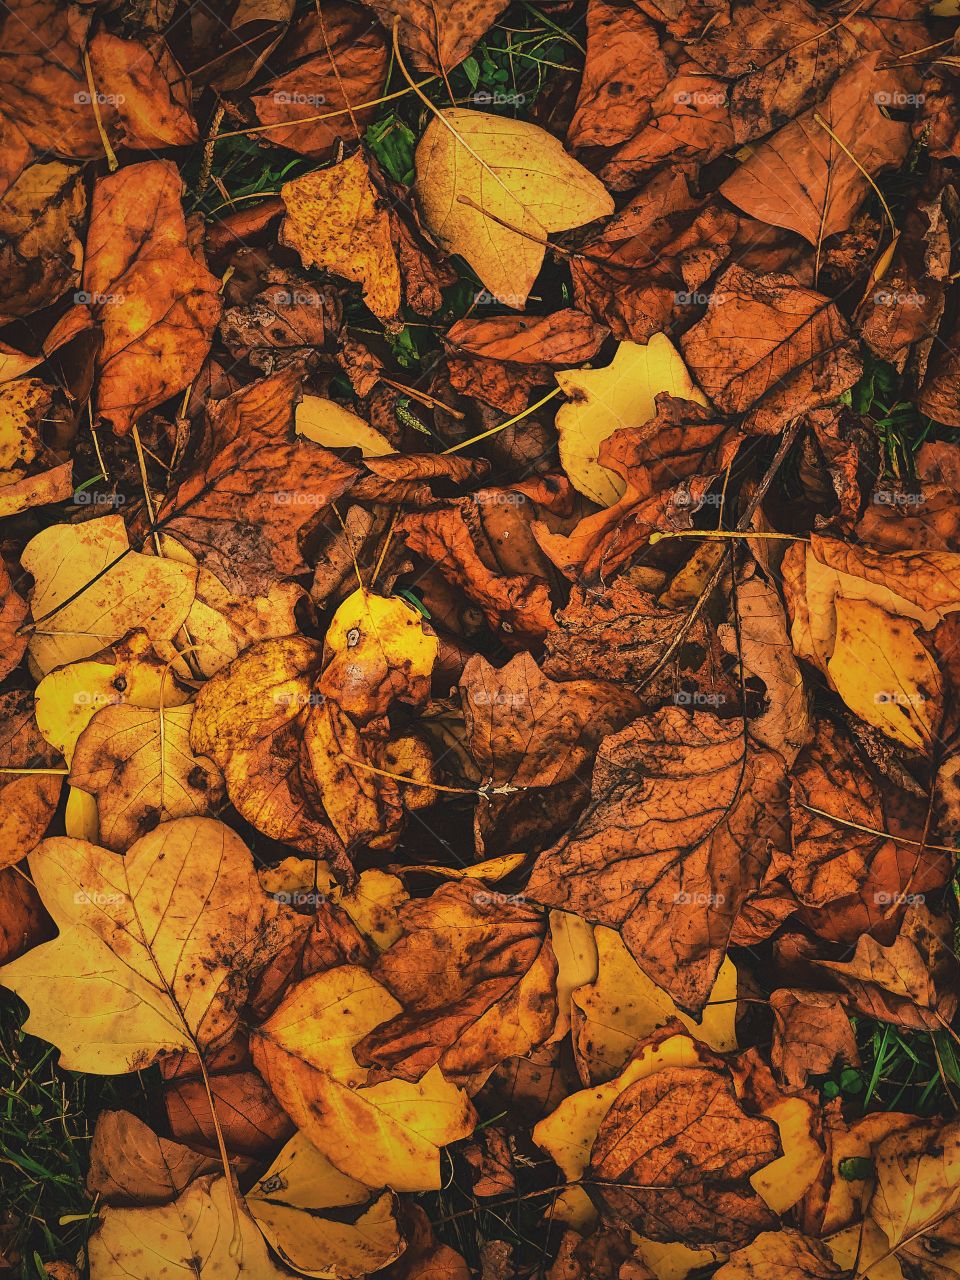 Fallen Leaves On The Ground, Fallen Leaves In The Forest, Colorful Leaves On The Ground, Details In The Leaves, Autumn Leaves In The Woods 